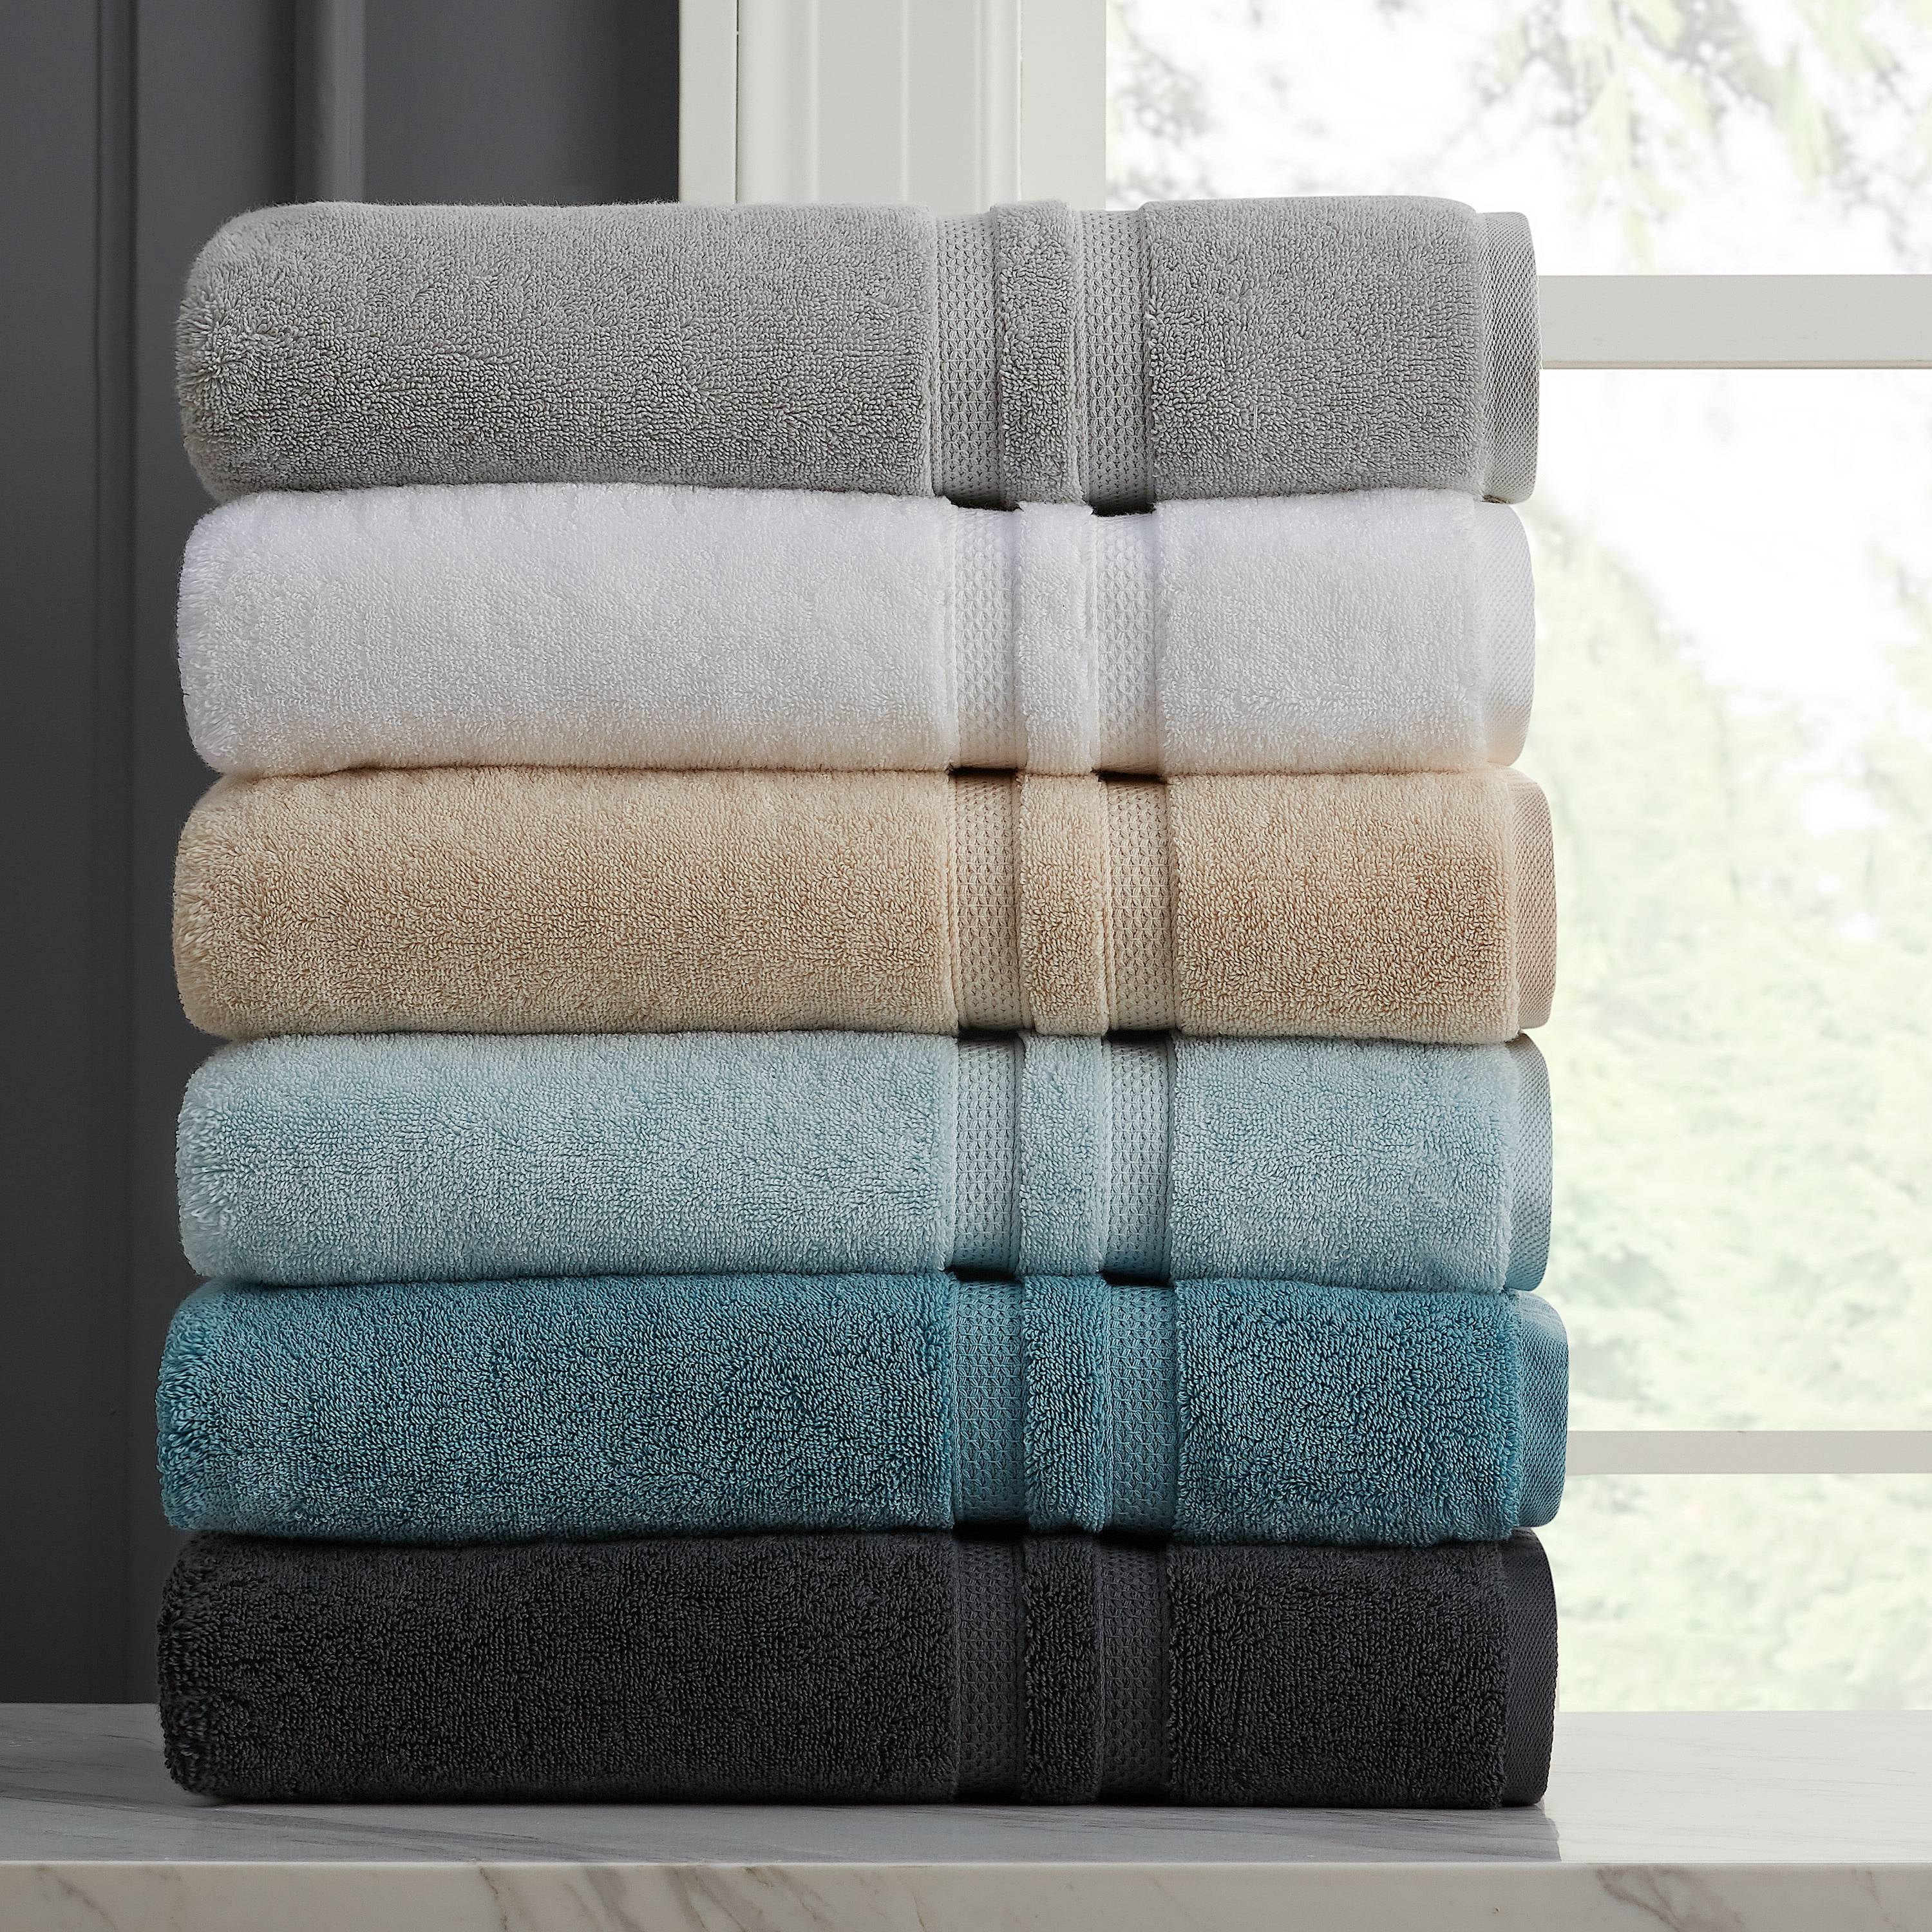 Large Jumbo Bath Towel 35x70 Premium & Luxury Towels for Bathroom Worth $34.95 - Black American Soft Linen Turkish Cotton Maximum Softness & Absorbent Bath Sheet